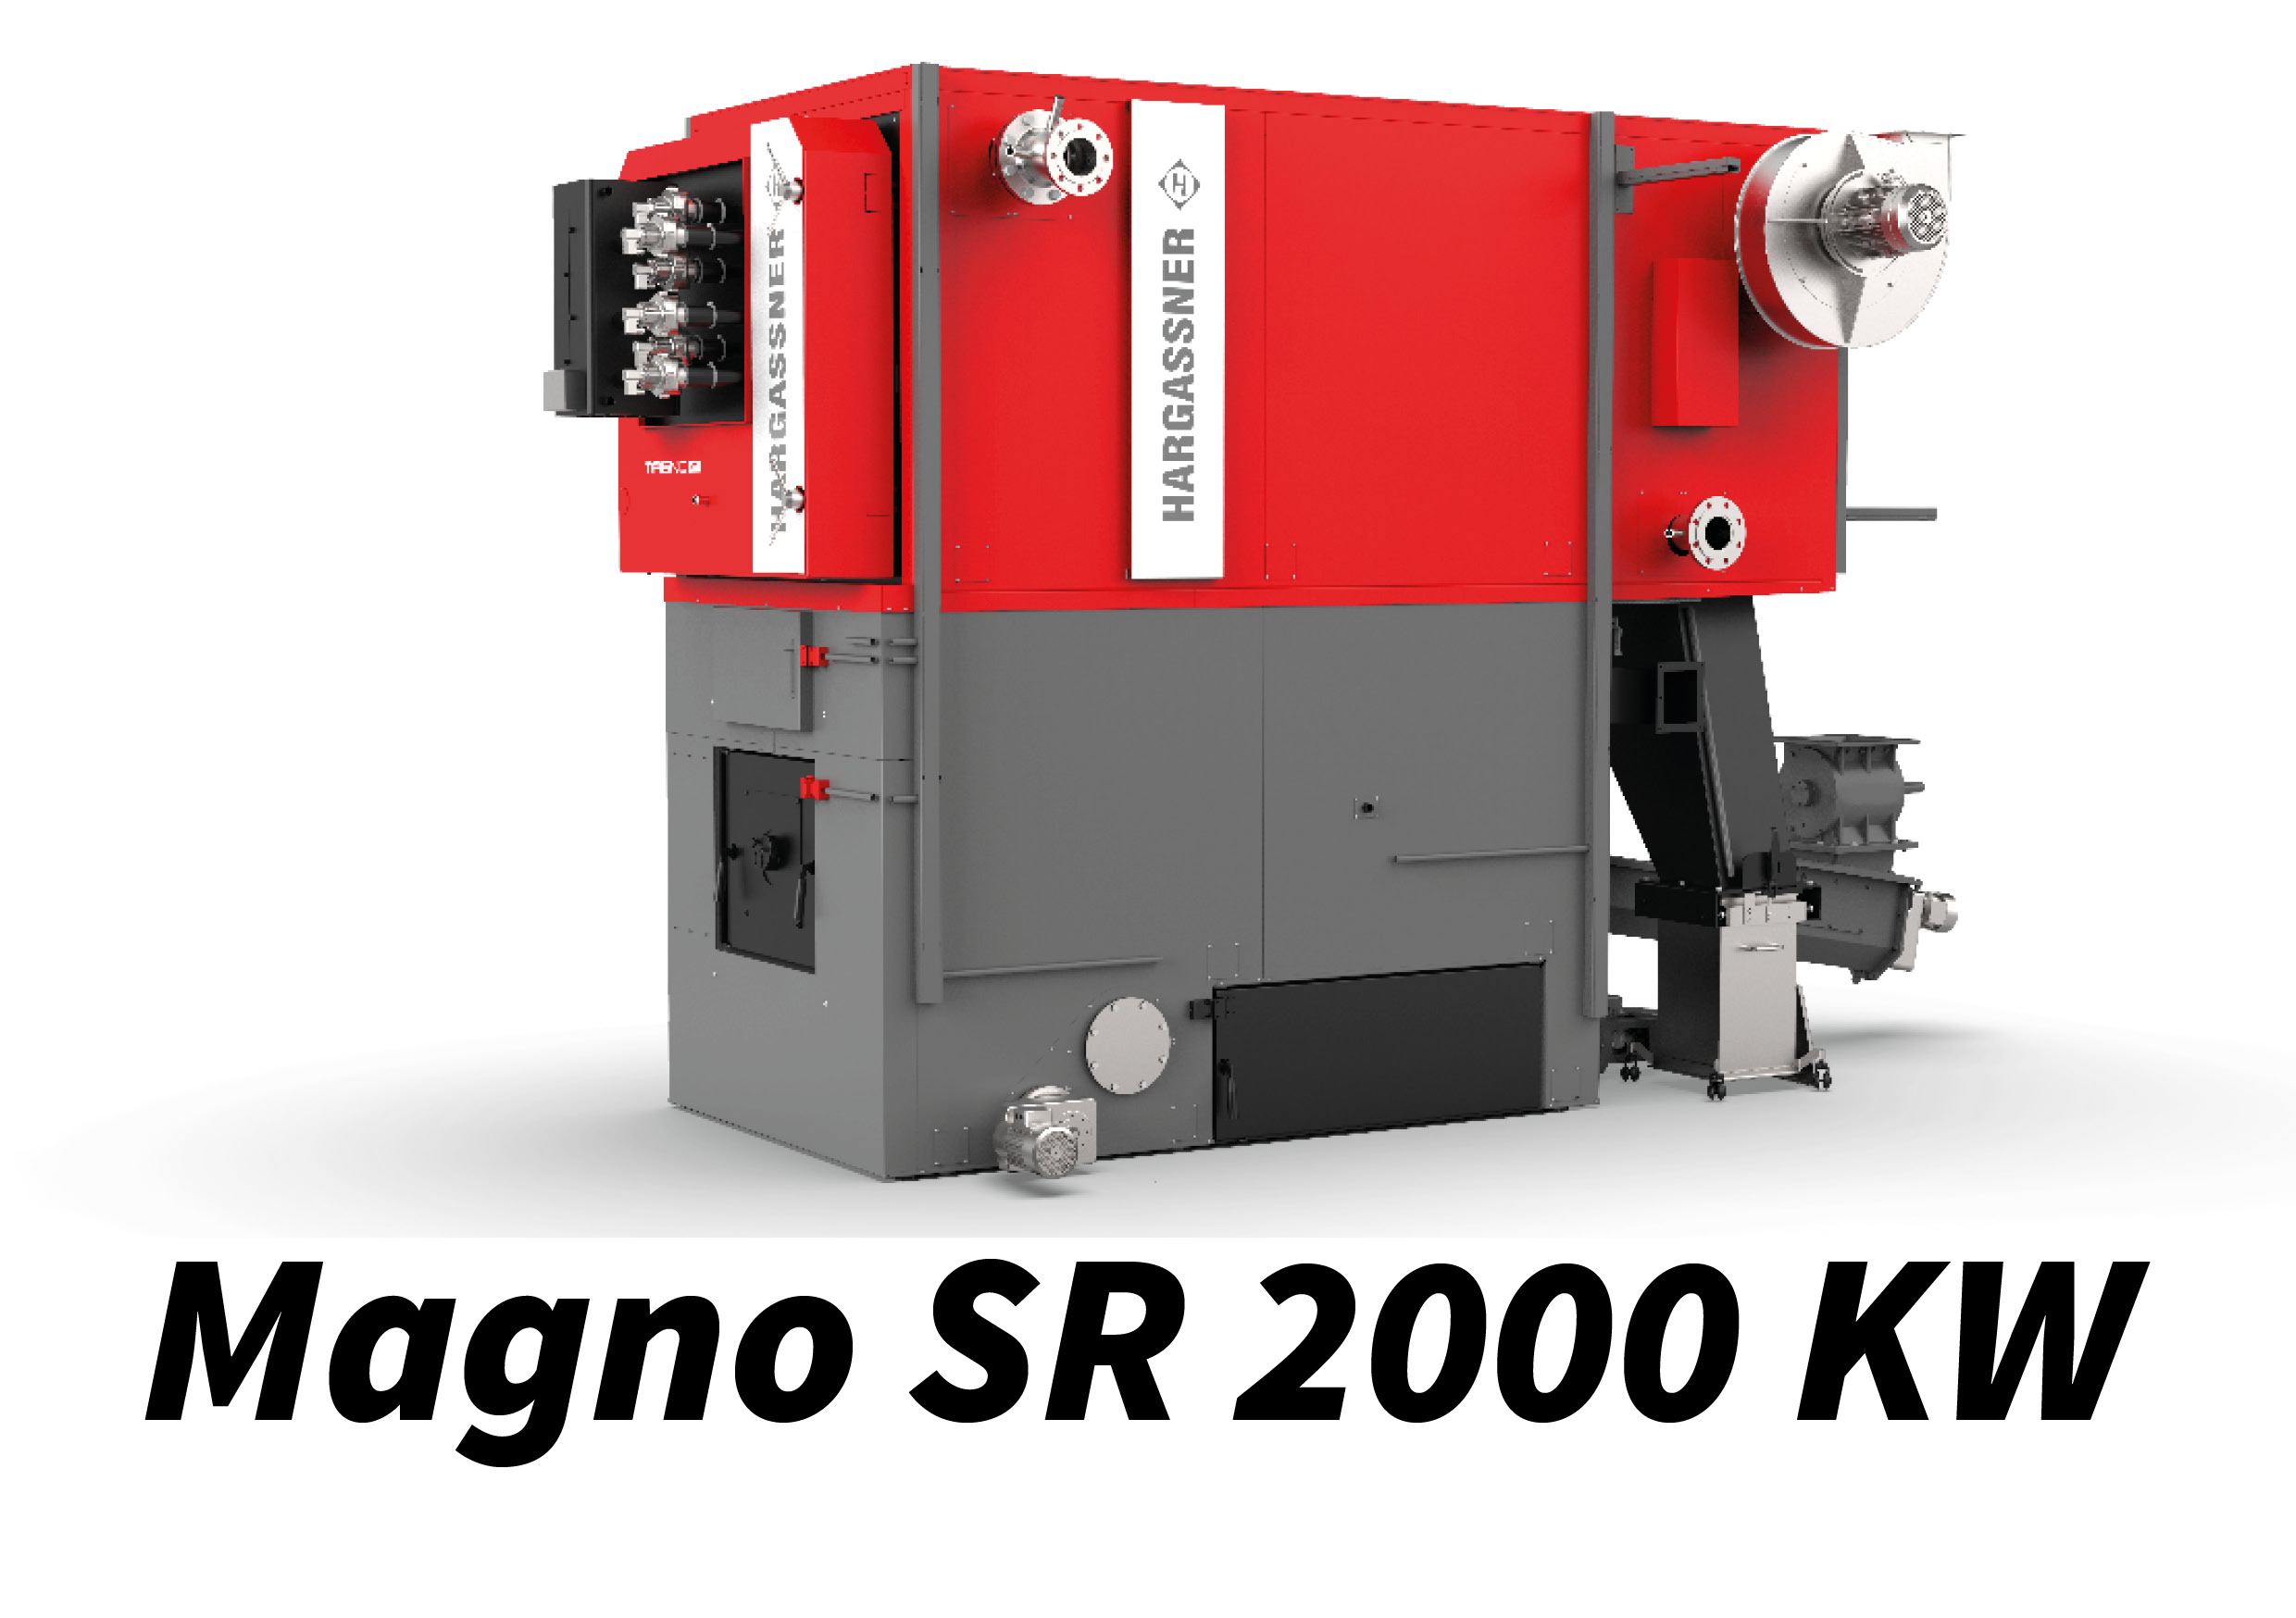 Magno SR 2000 kW